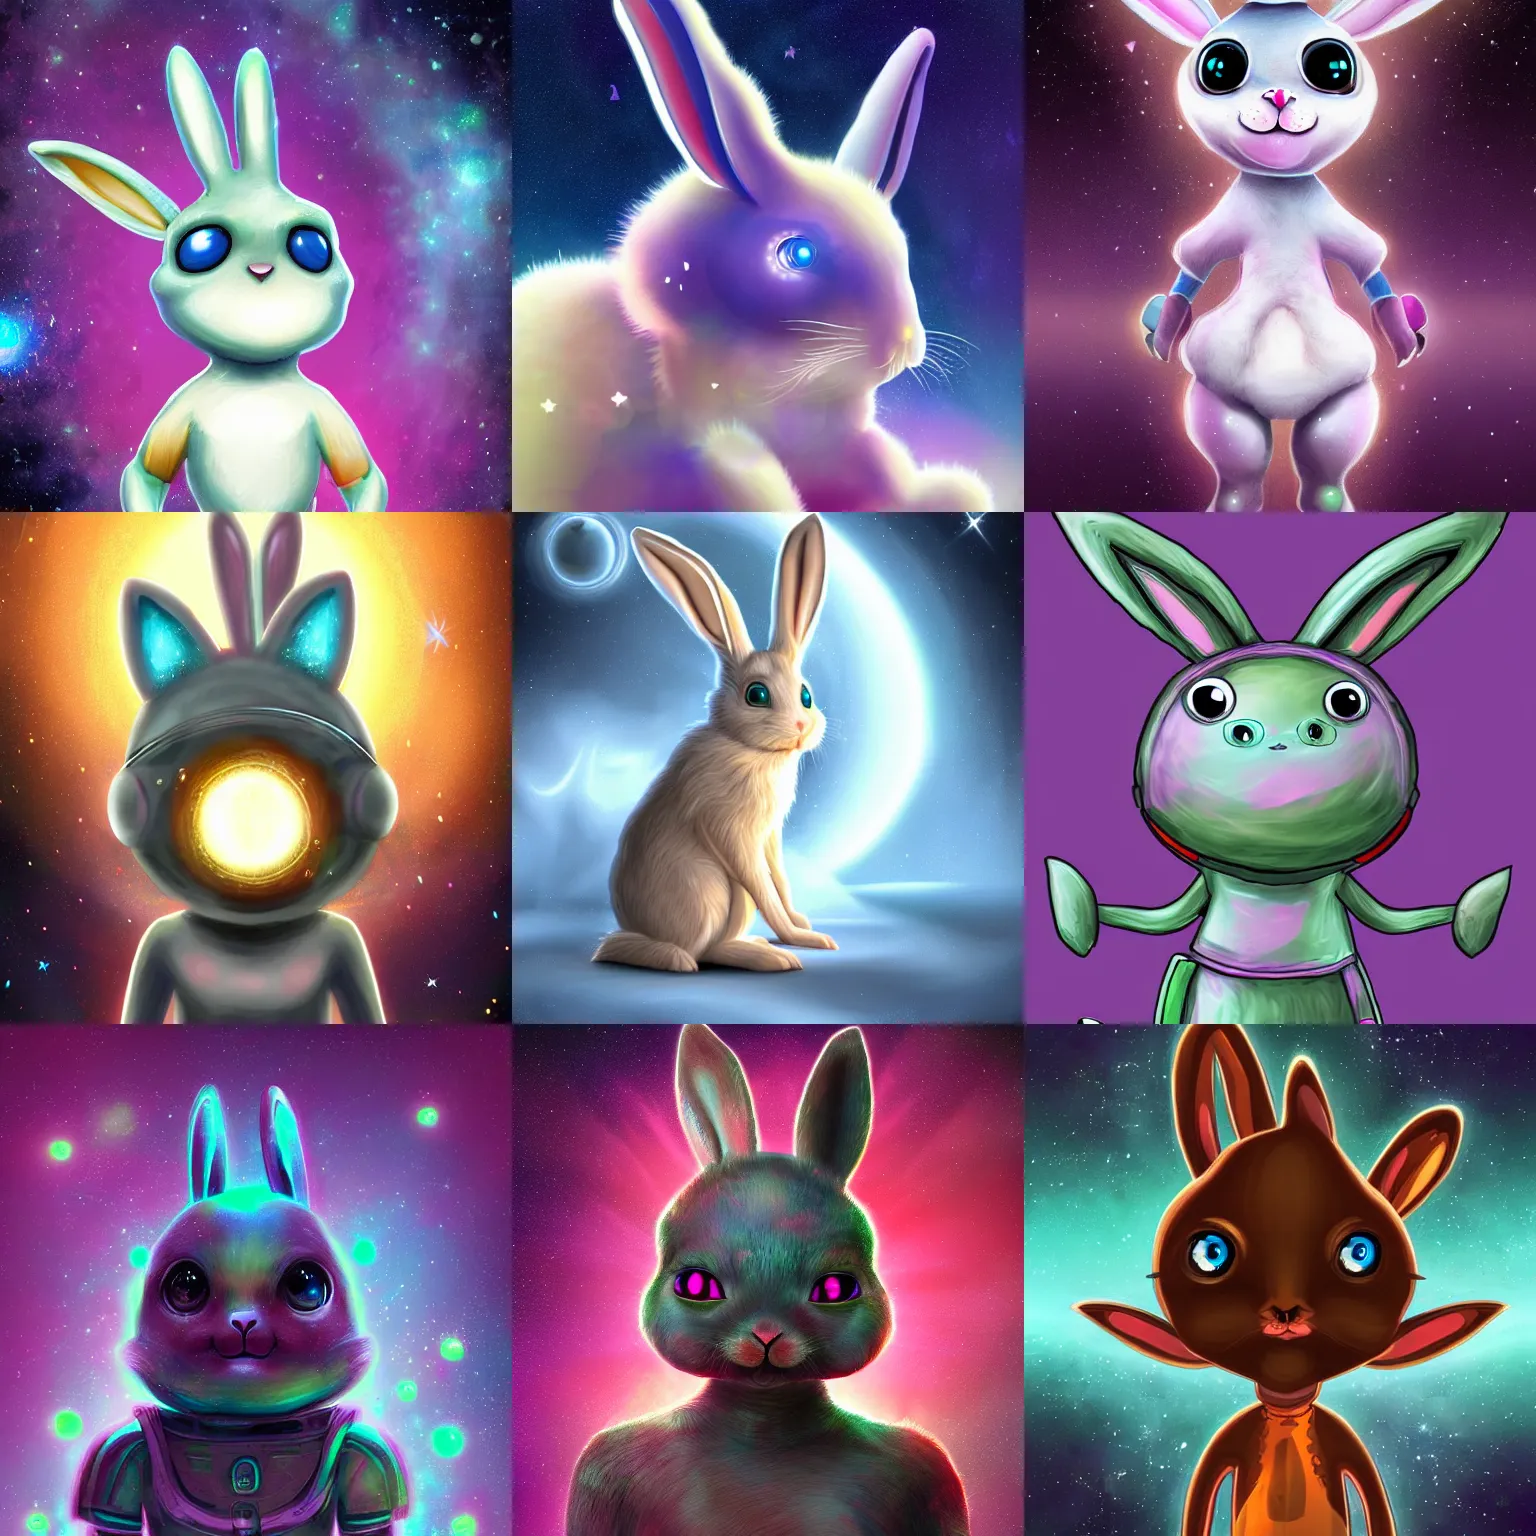 Prompt: a cute galactic alien bunny, digital art, very detailed 4k